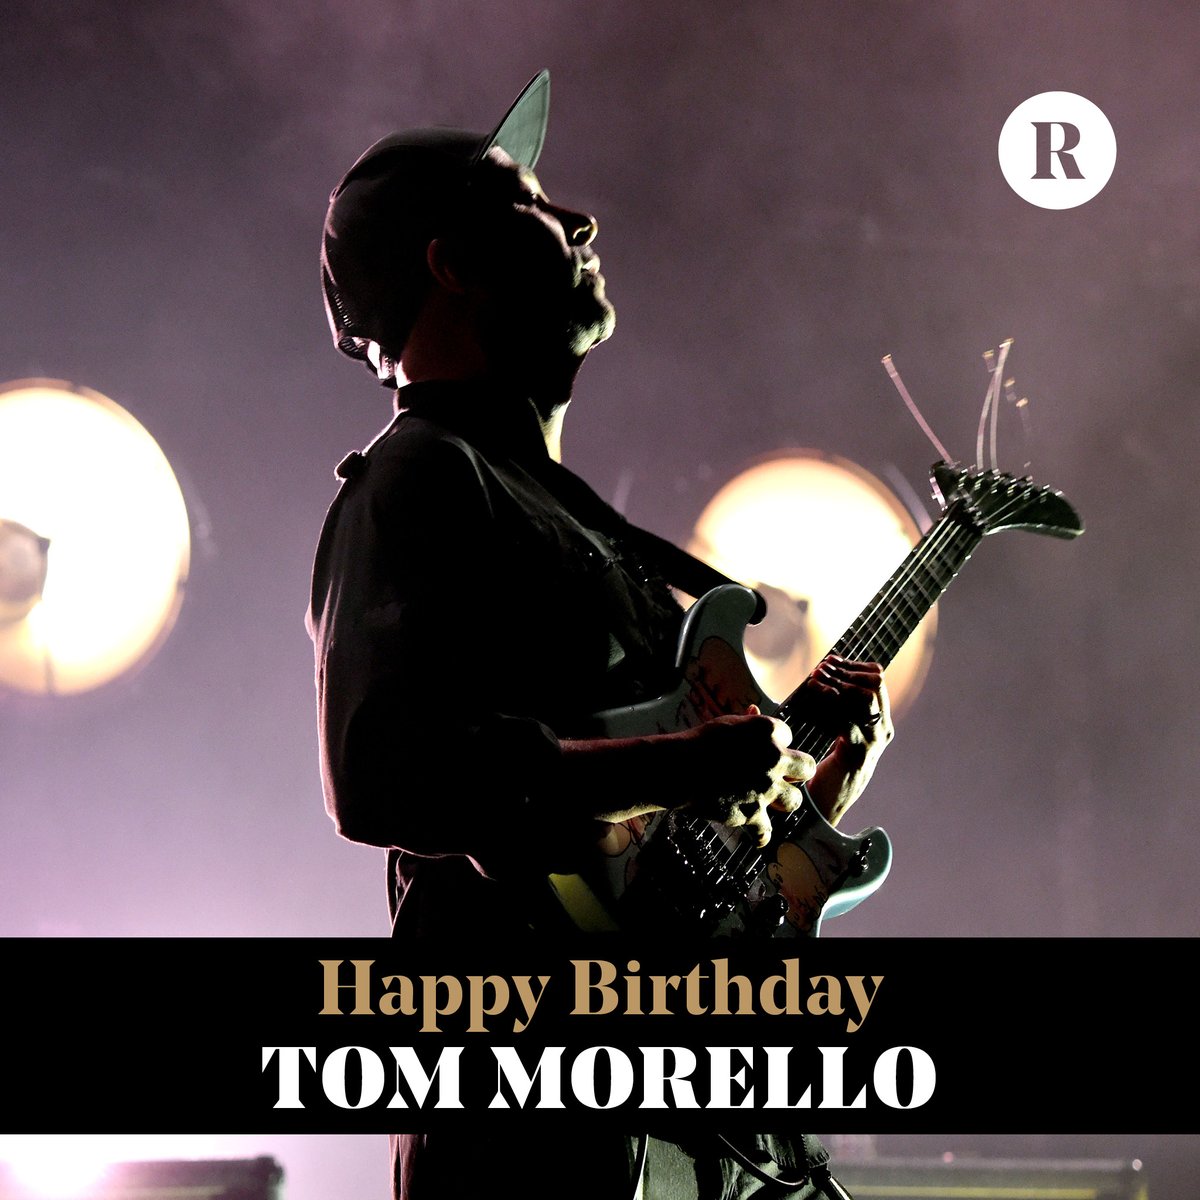 🎂 Happy birthday, TOM MORELLO! 

What's your favorite RAGE AGAINST THE MACHINE riff?